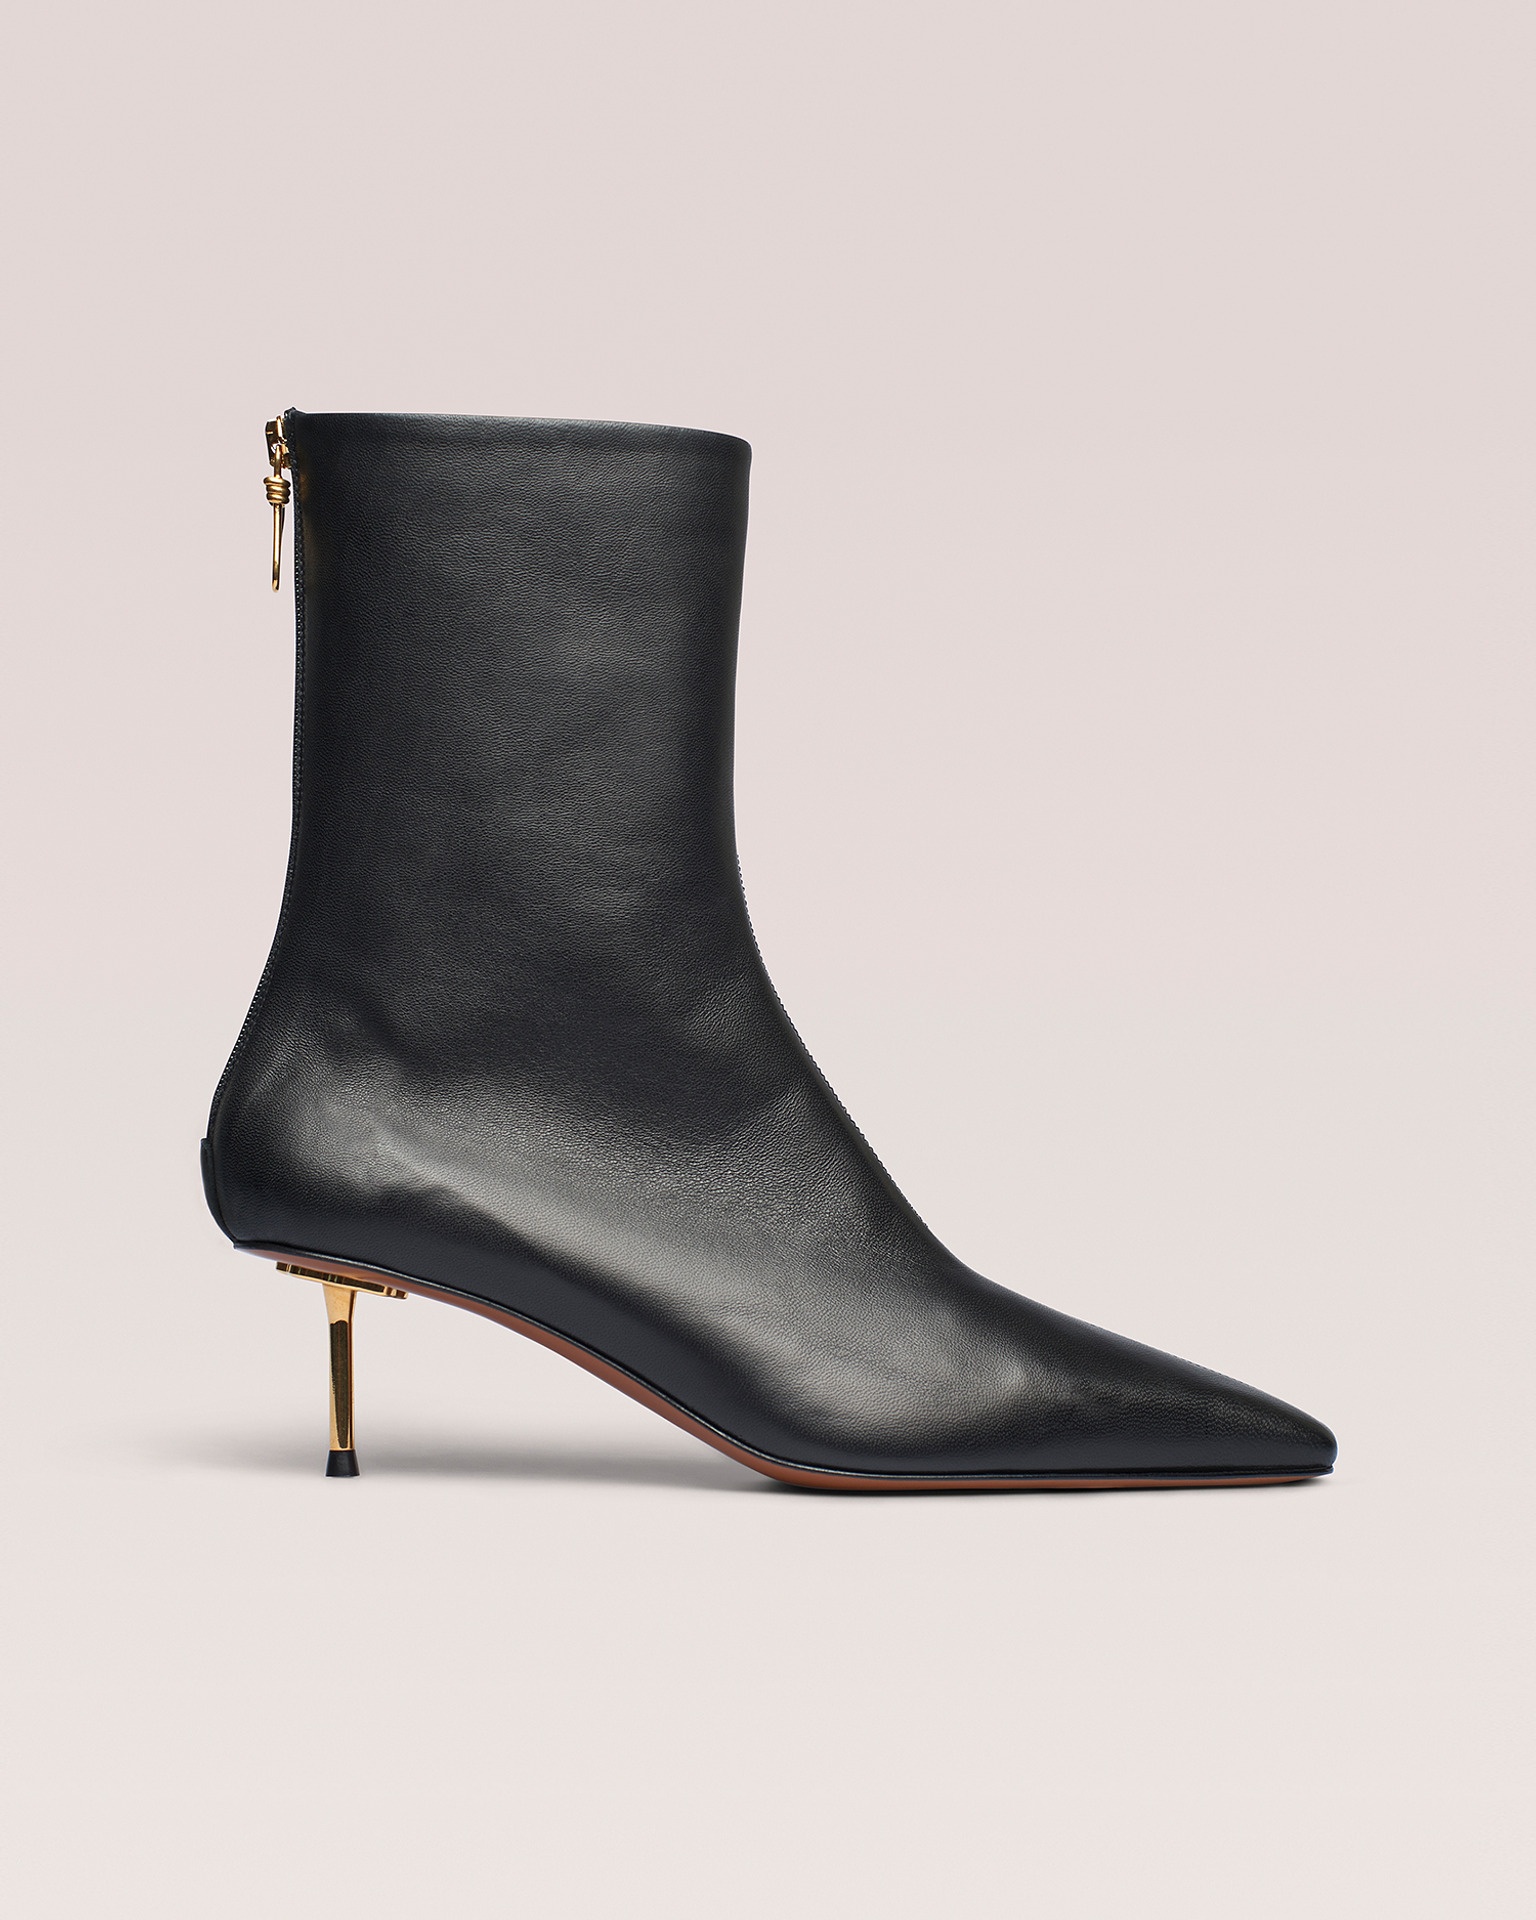 TALLI - Elongated square toe booties with metal heels - Black - 4